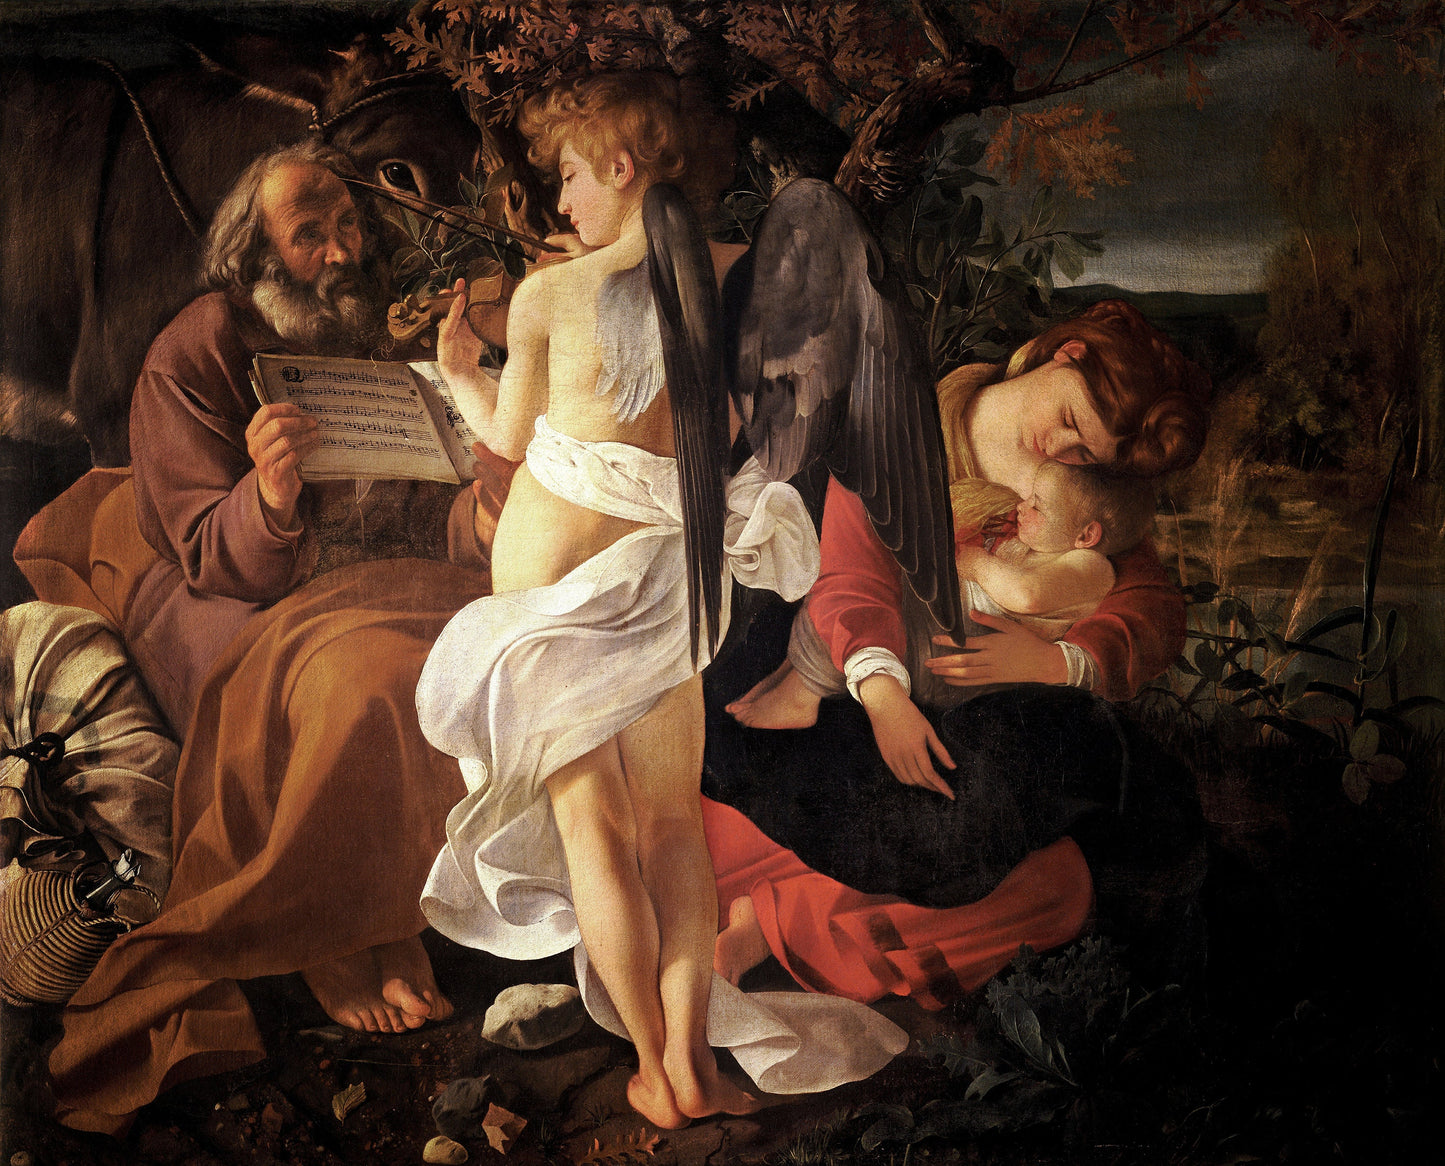 Caravaggio Baroque Paintings Set 2 [21 Images]